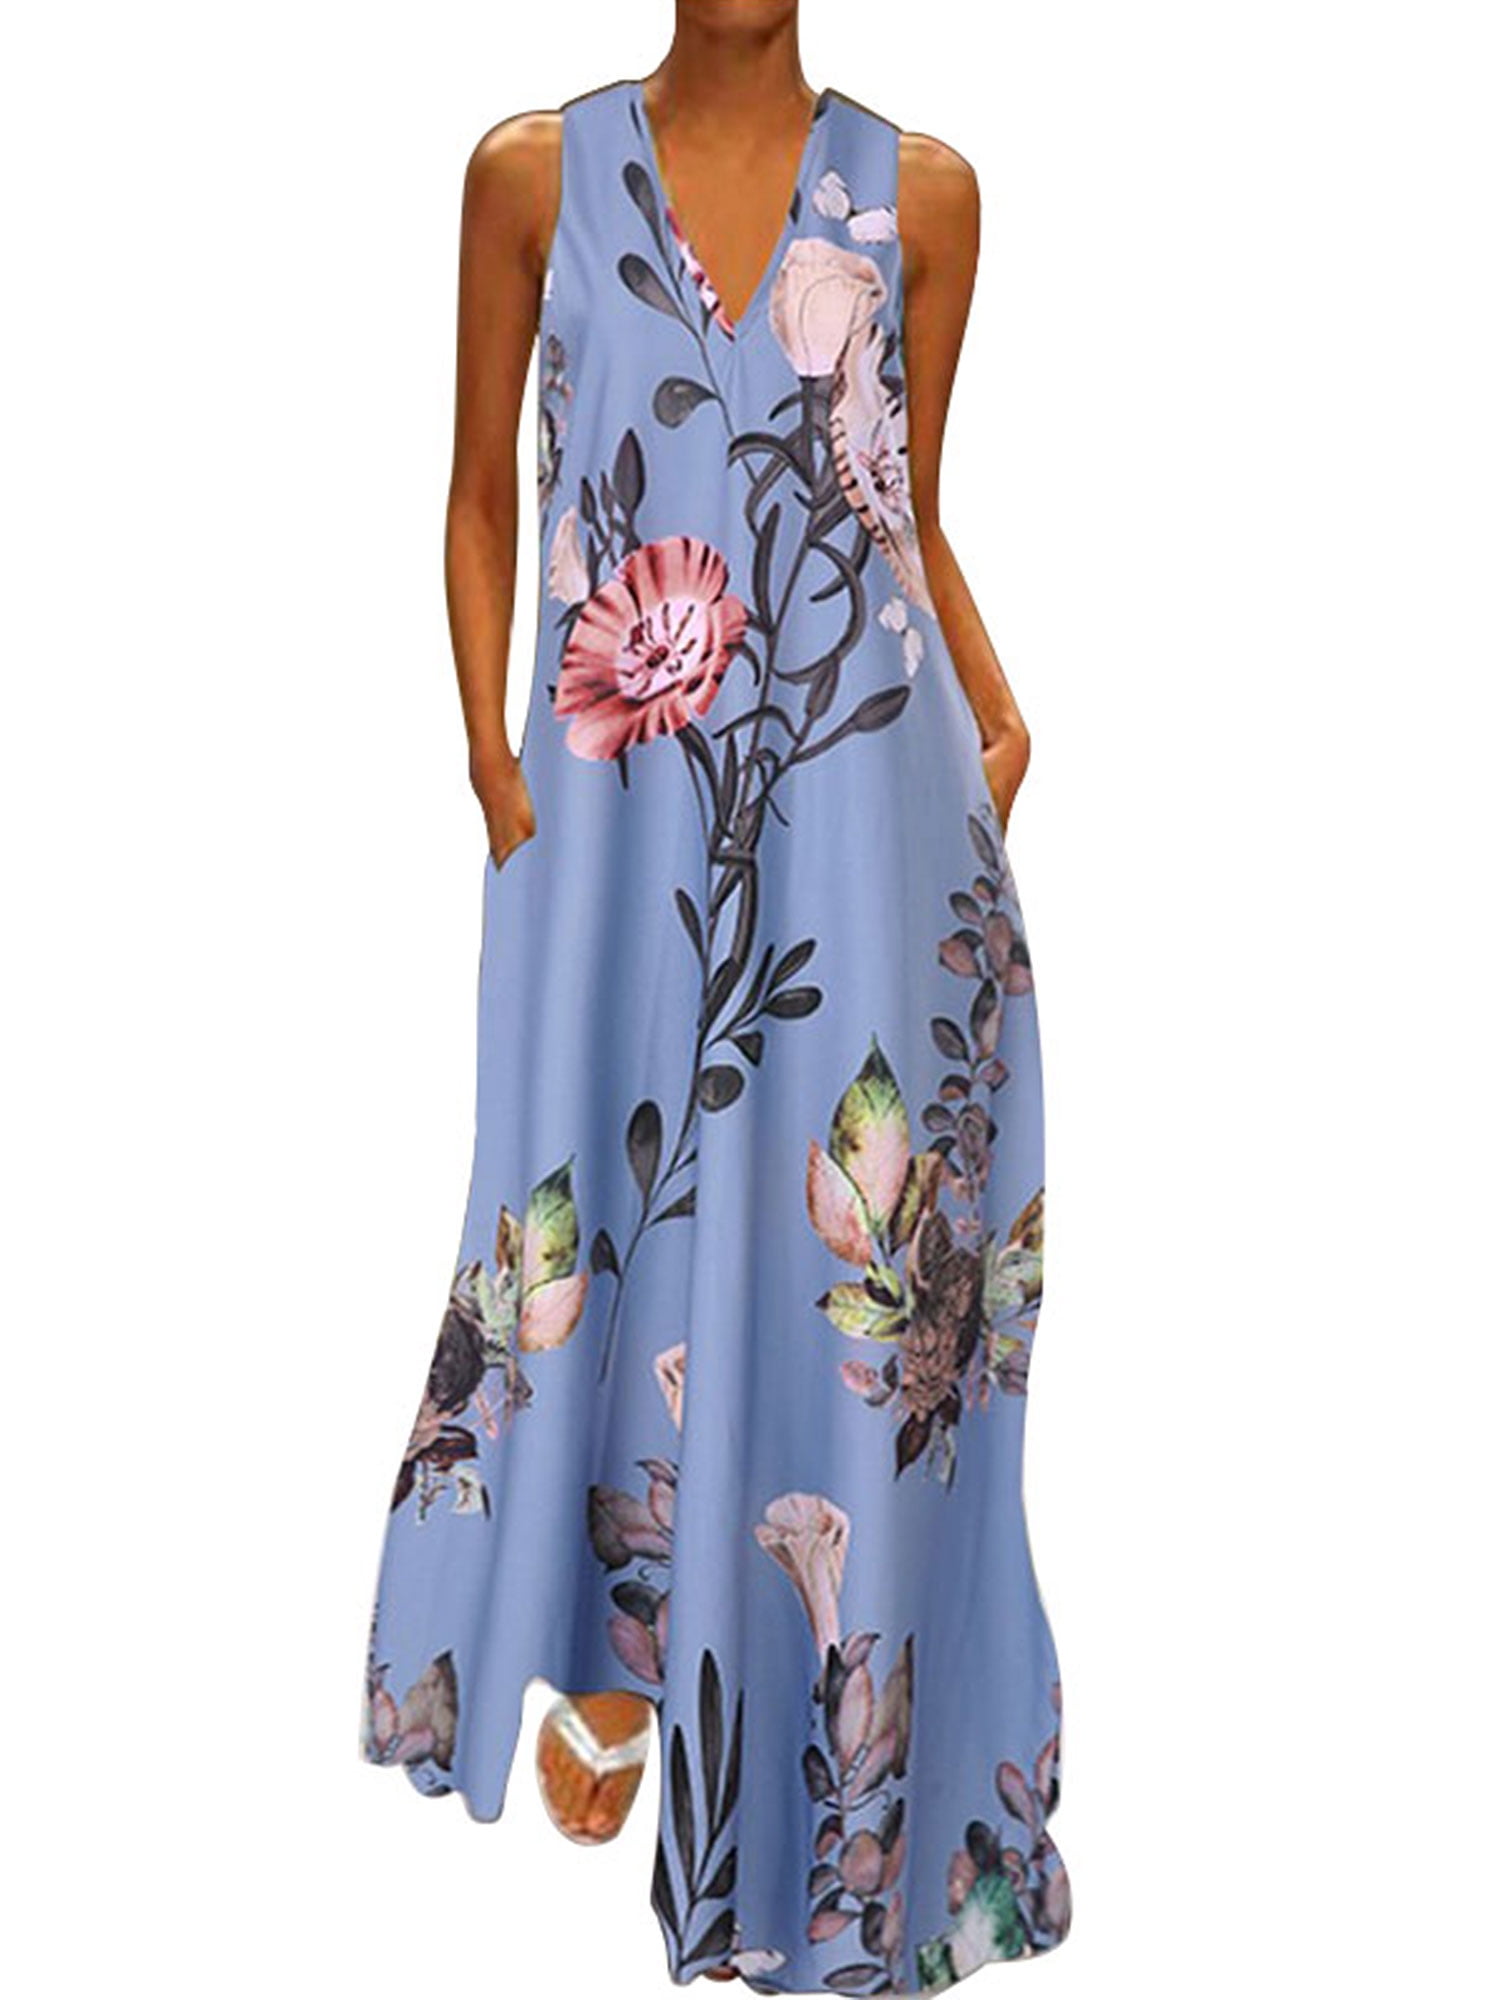 POTO Dress for Women Plus Size Ladies Casual Print Tank Dress Sleeveless Loose Party Long Maxi Dress Beach Dresses Sundress 